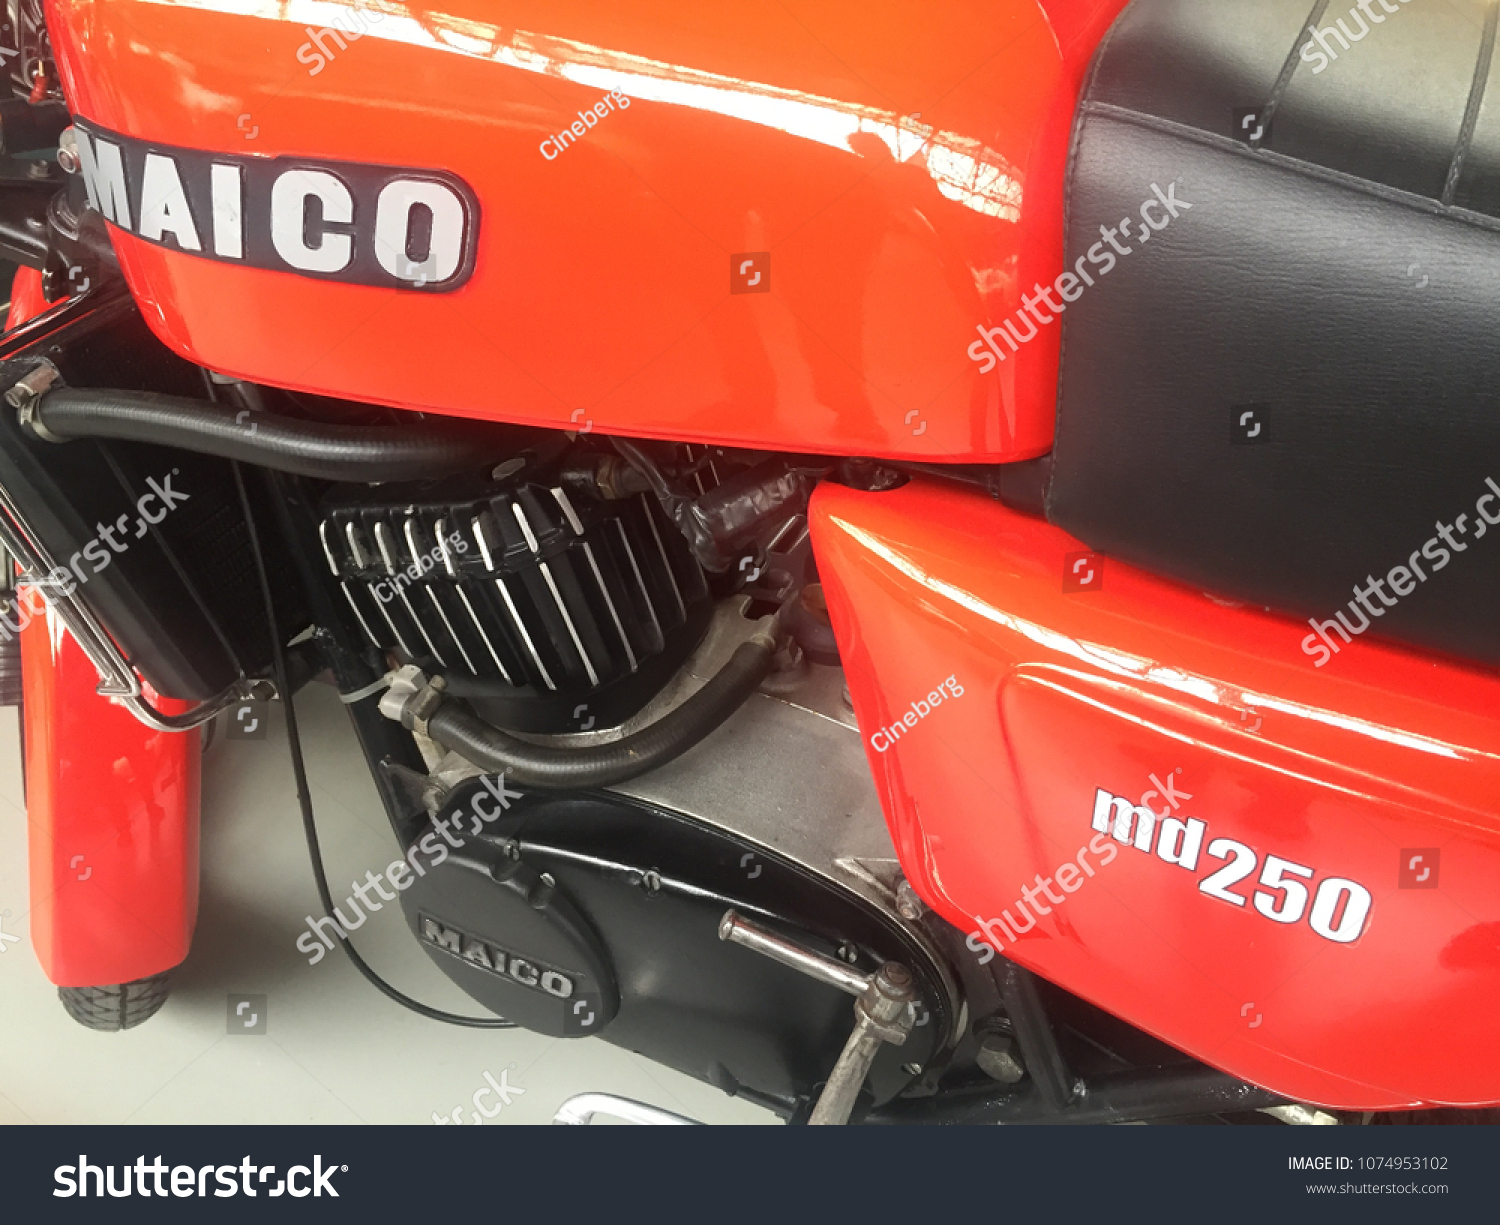 KIESENBERG Uhr Maico Motorrad Militär Classic L-21079 